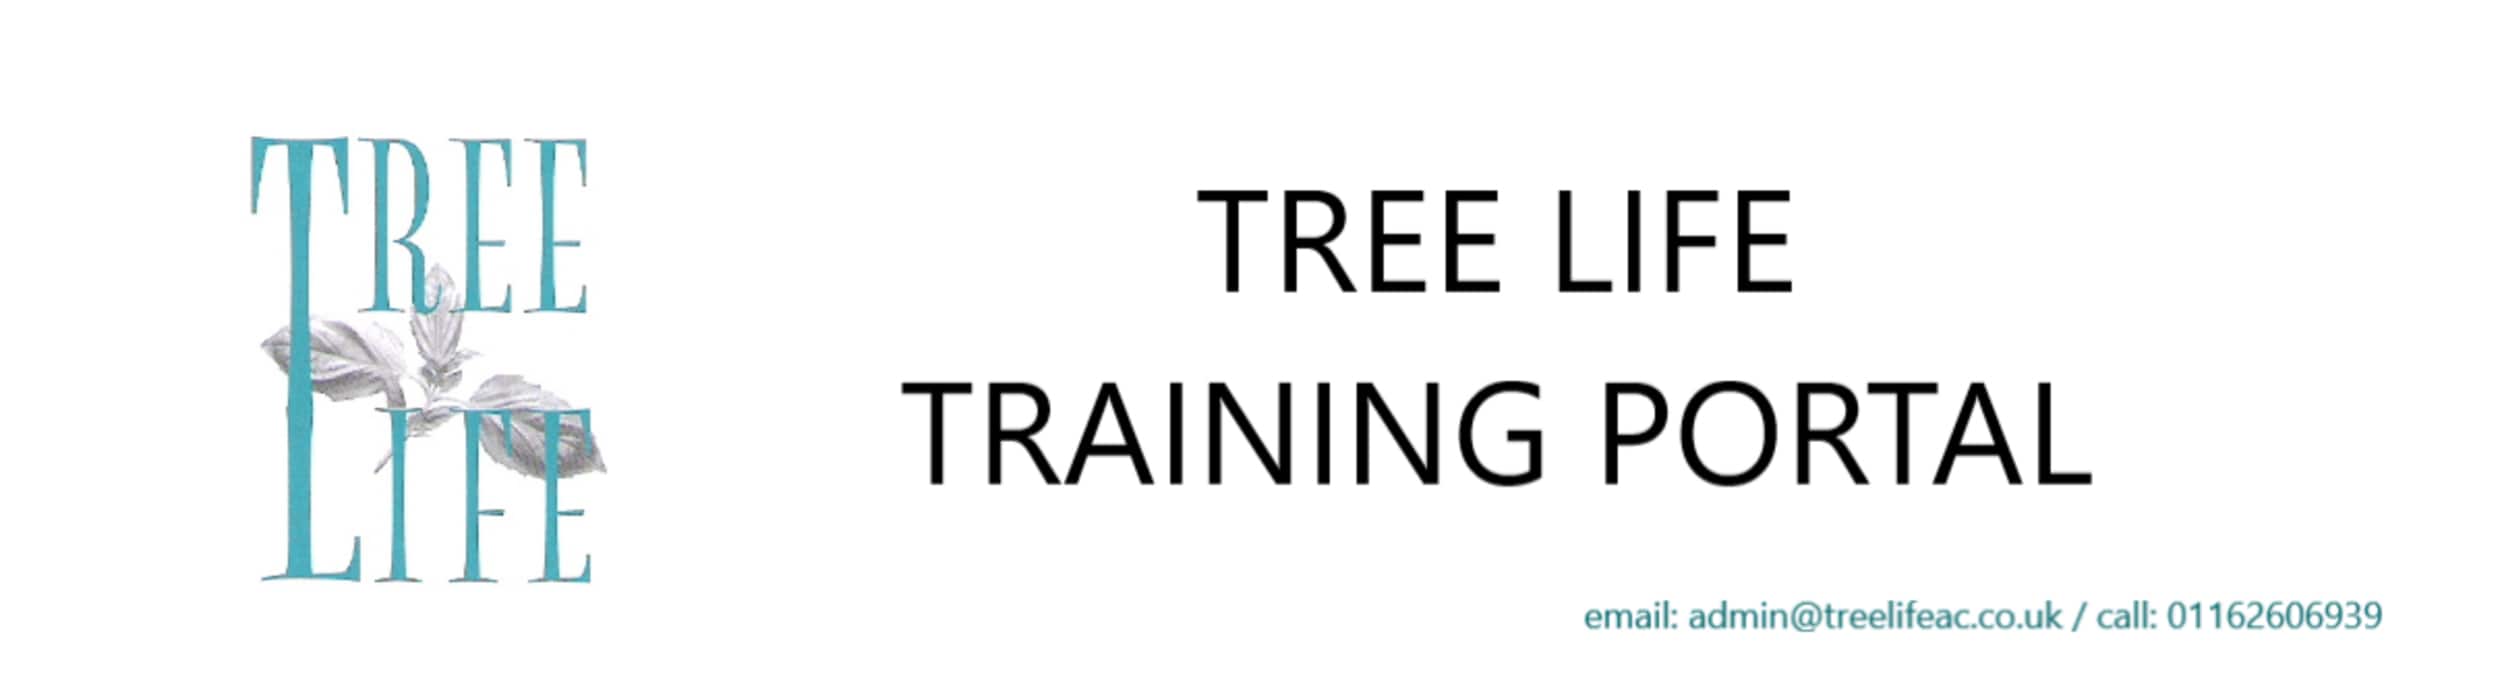 The Tree Life Training Portal